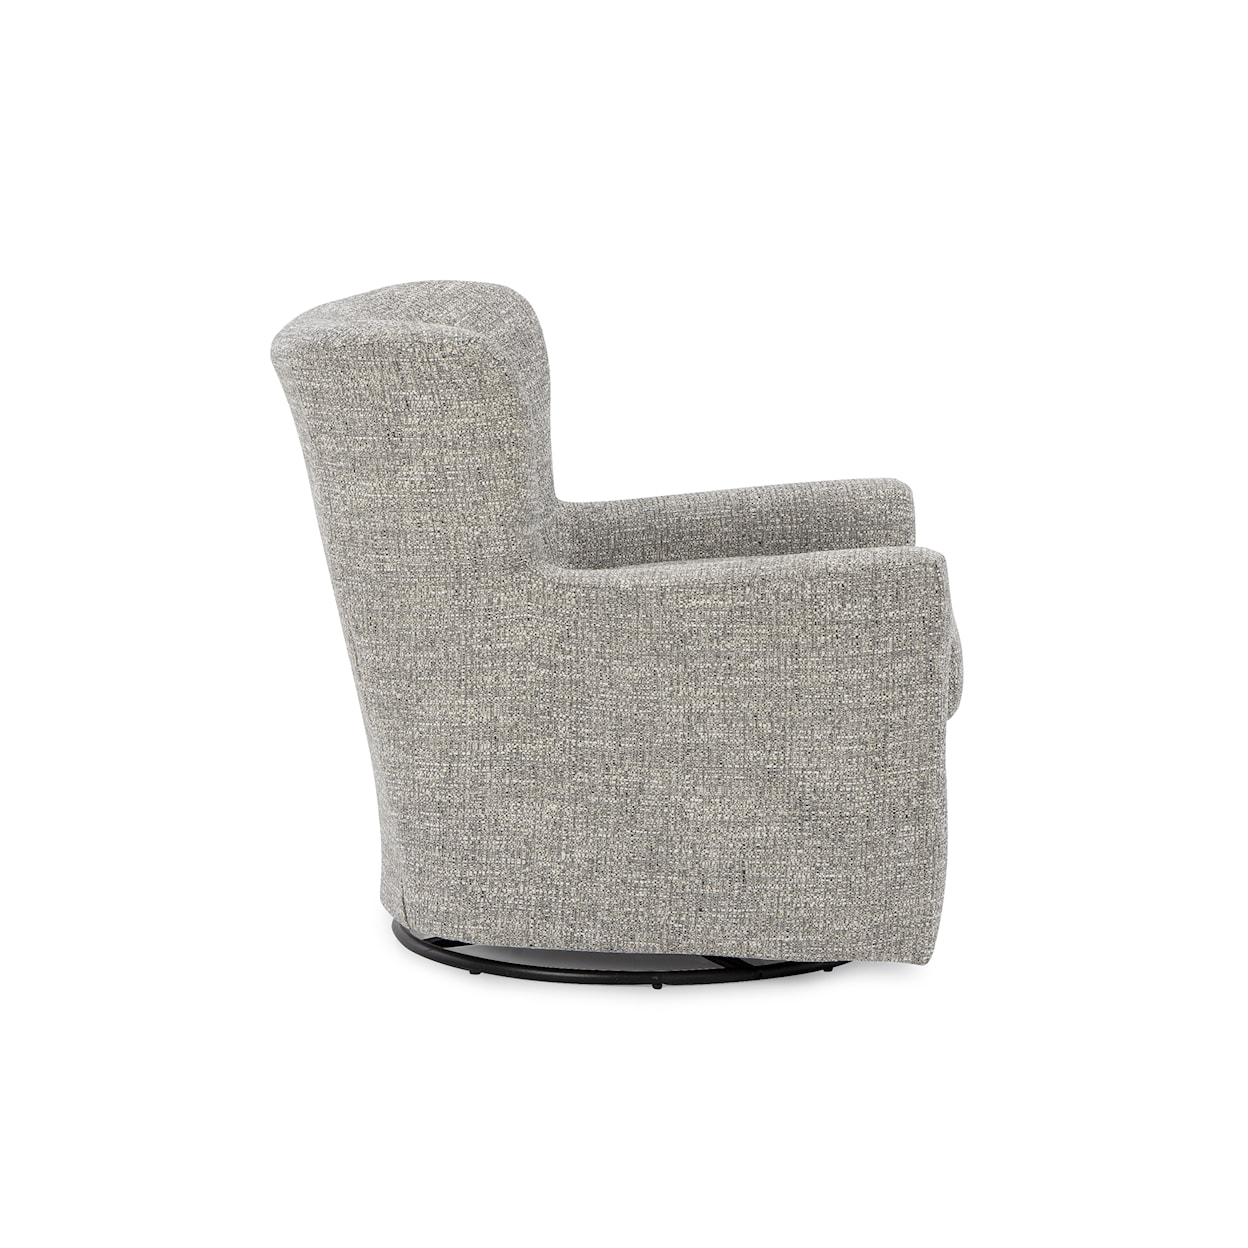 Bravo Furniture Casimere Swivel Glider Chair